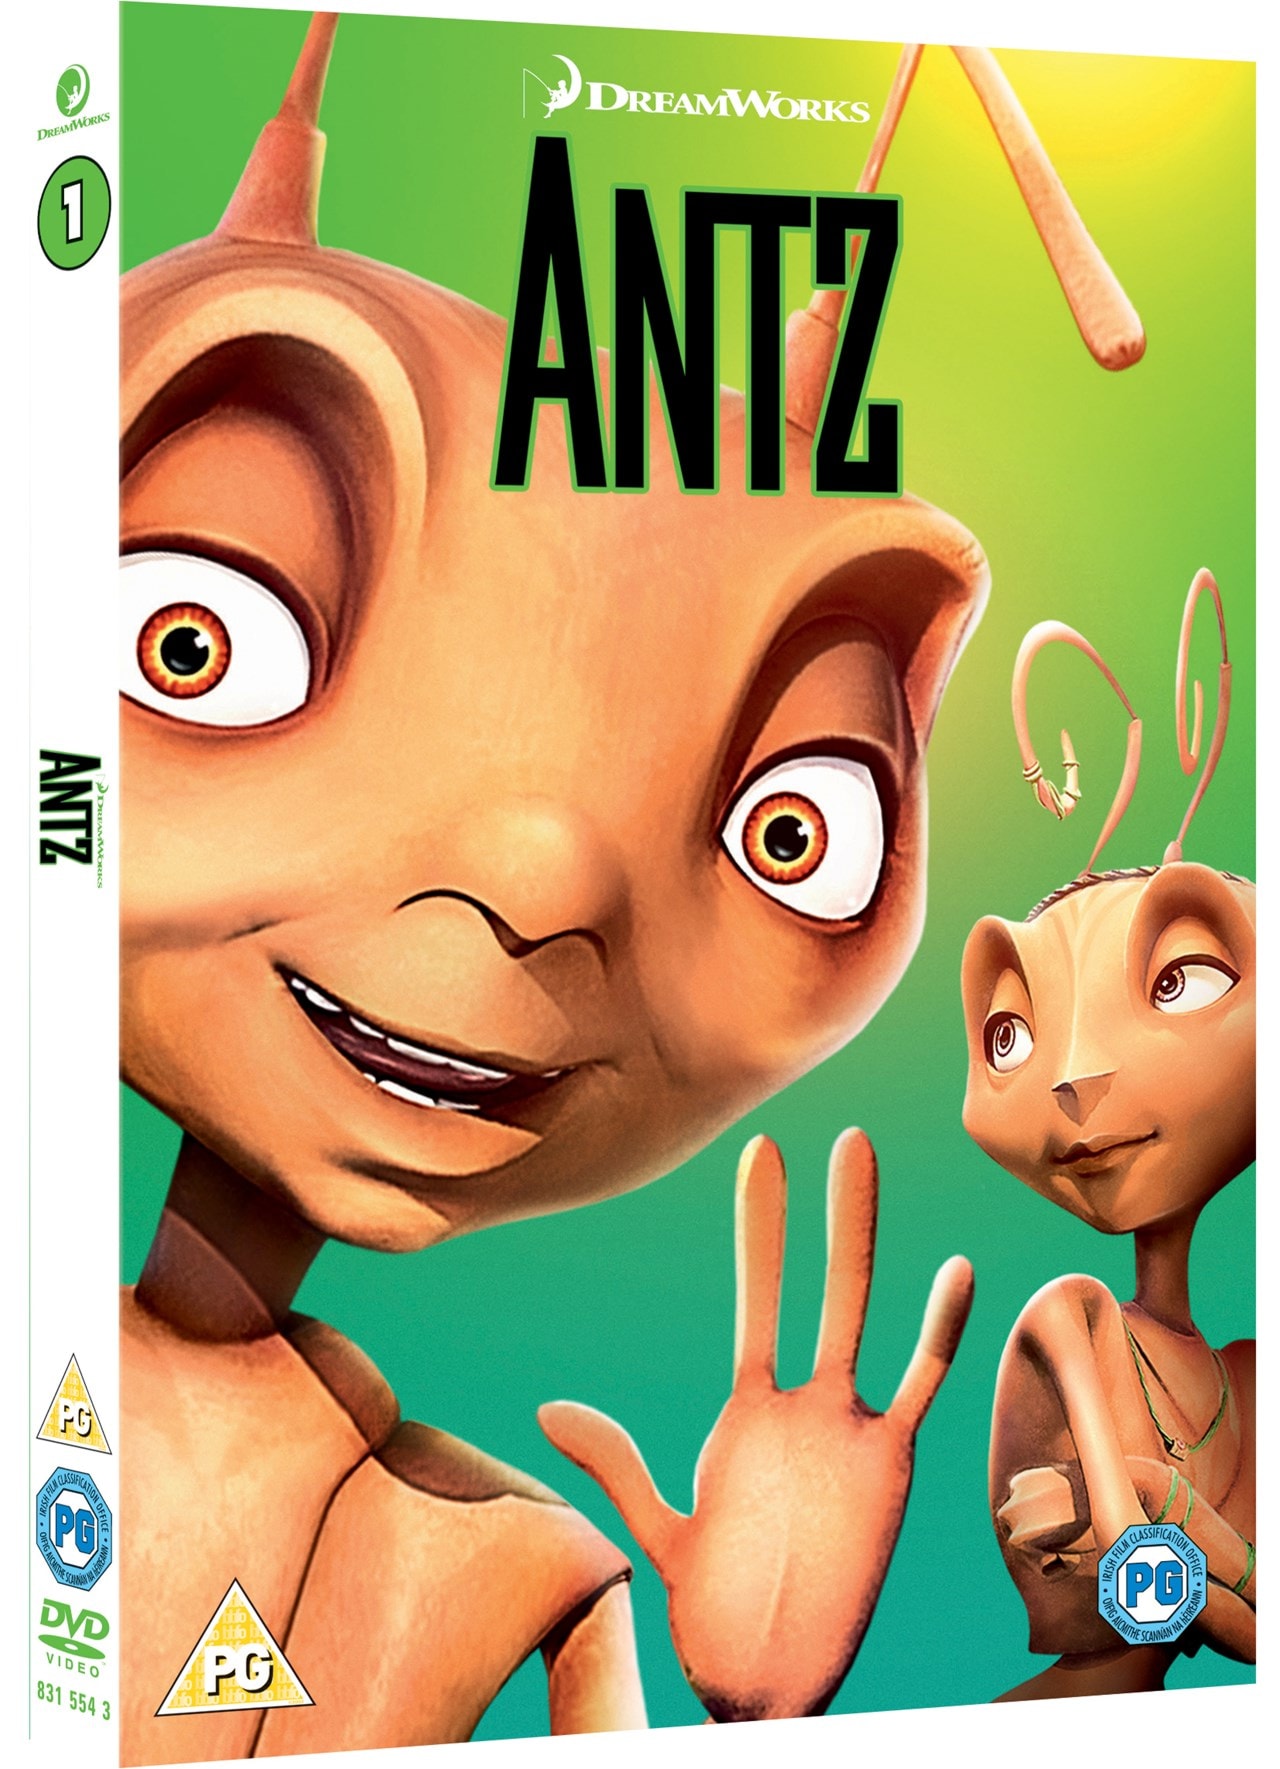 Antz | DVD | Free shipping over £20 | HMV Store